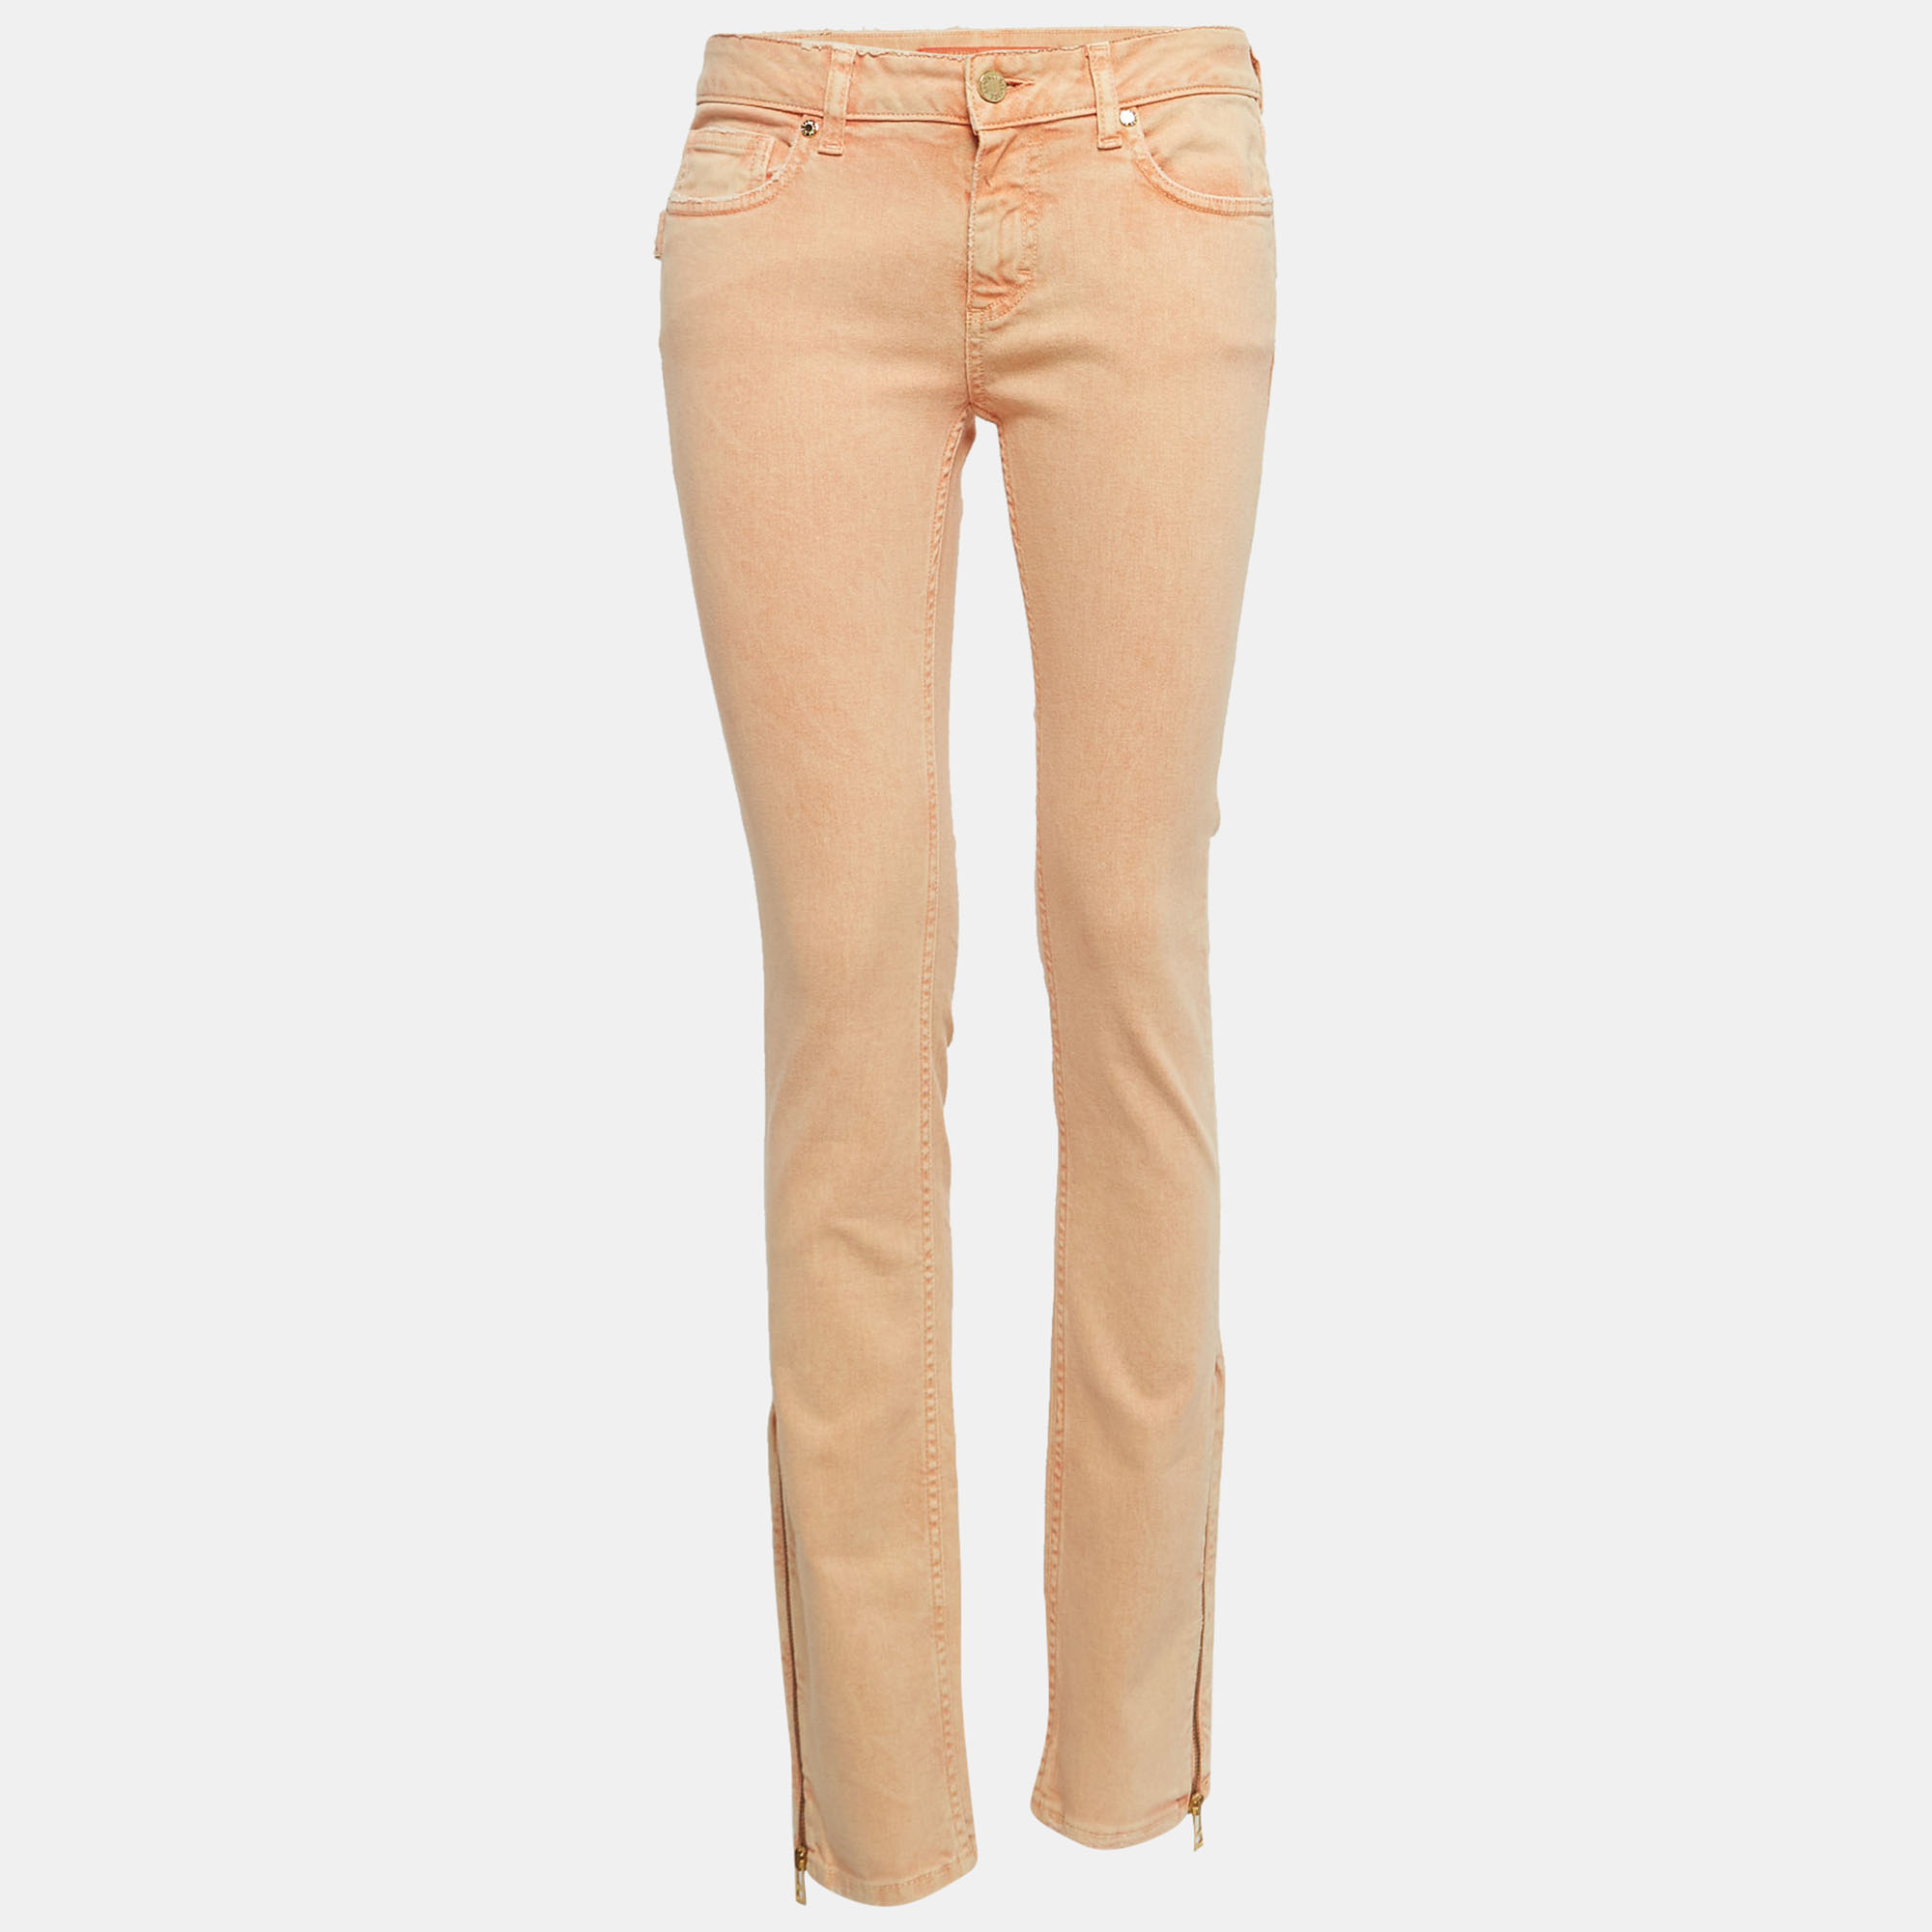 Pre-owned Zadig & Voltaire Light Orange Washed Denim Eva Snow Jeans M Waist 27"